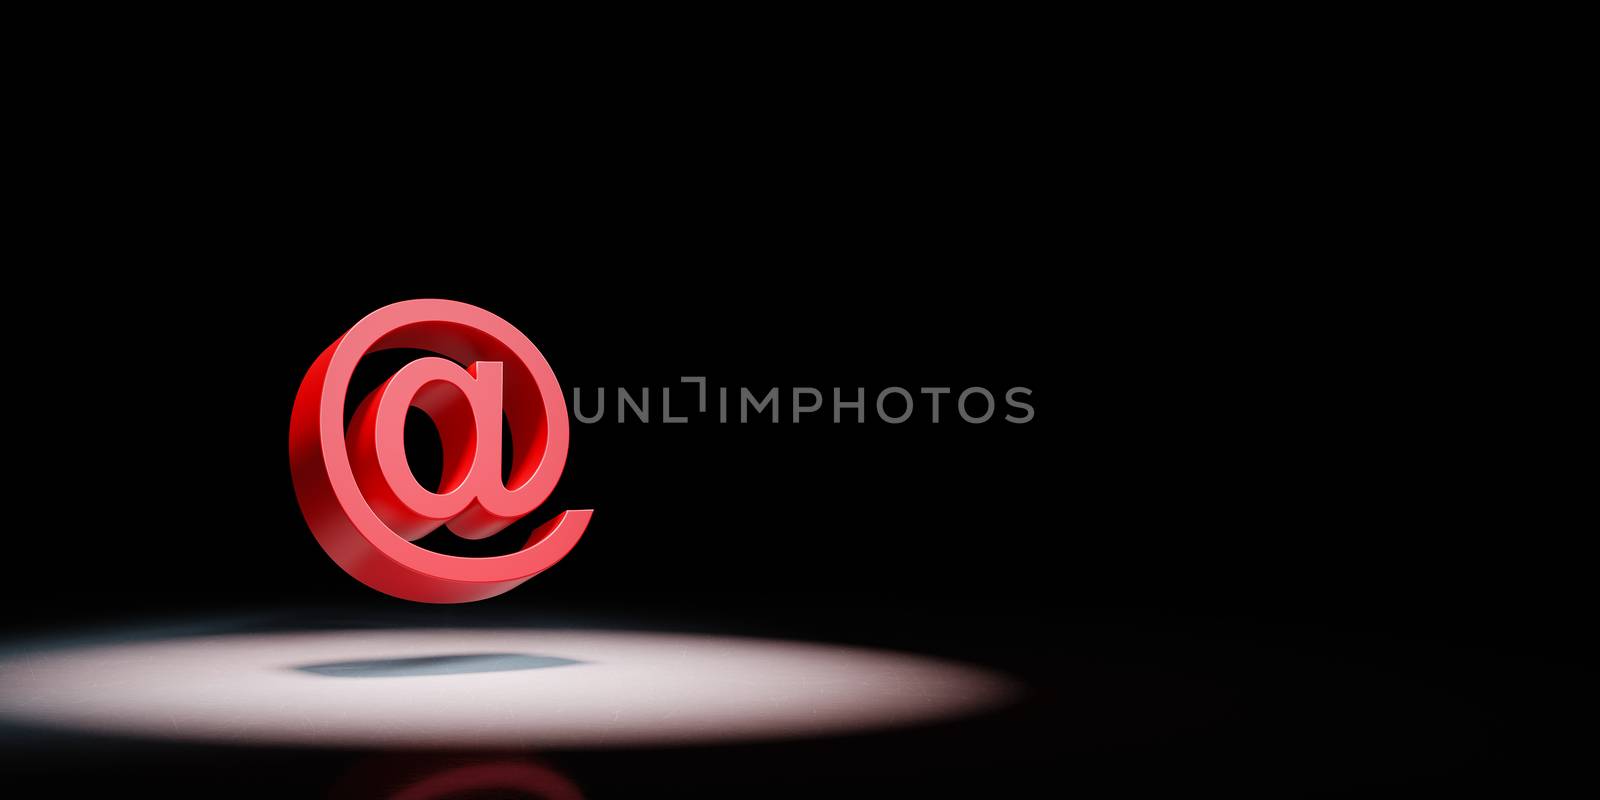 Email Symbol Spotlighted on Black Background by make